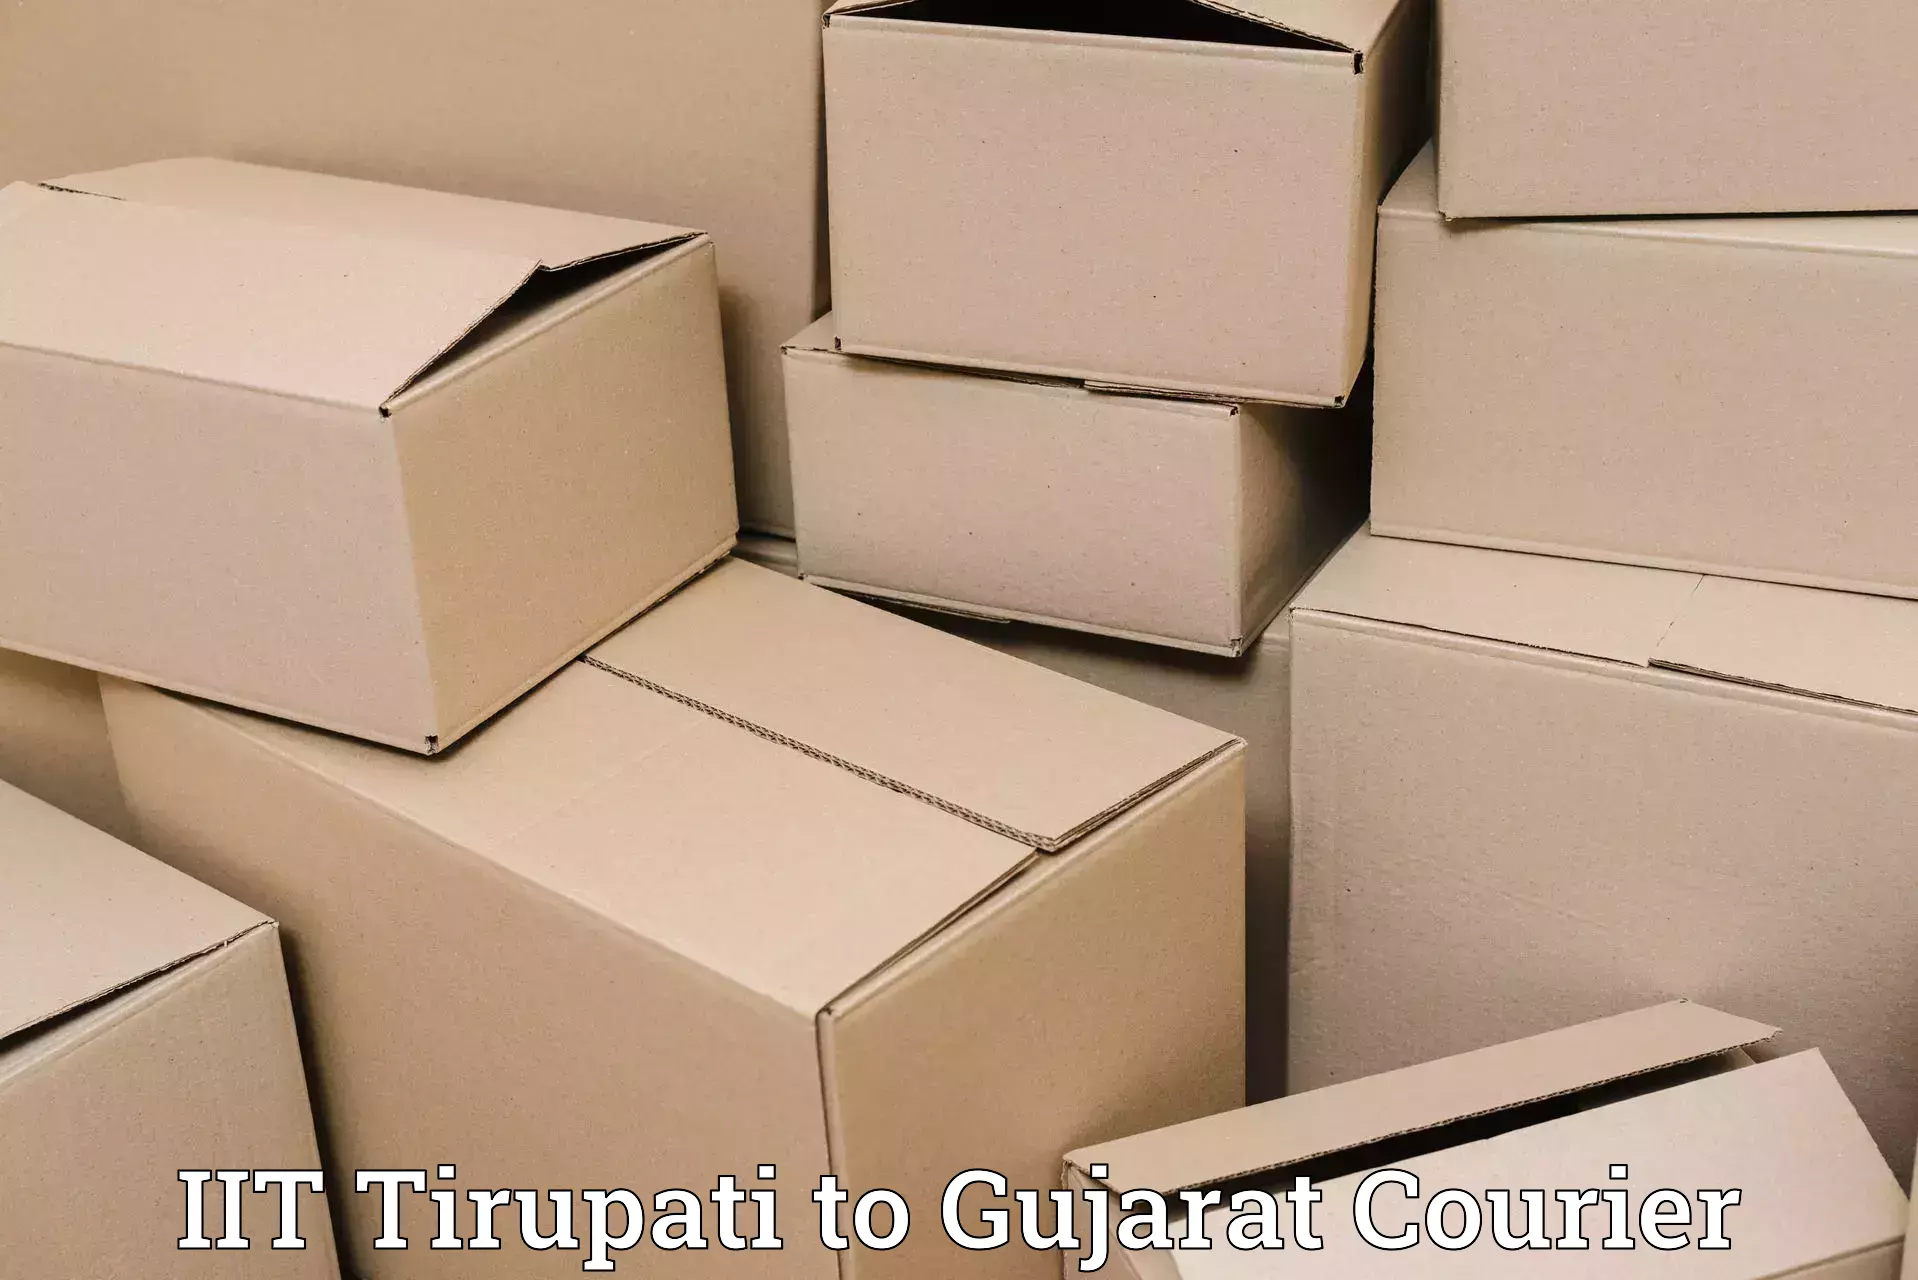 Express package handling in IIT Tirupati to Gujarat